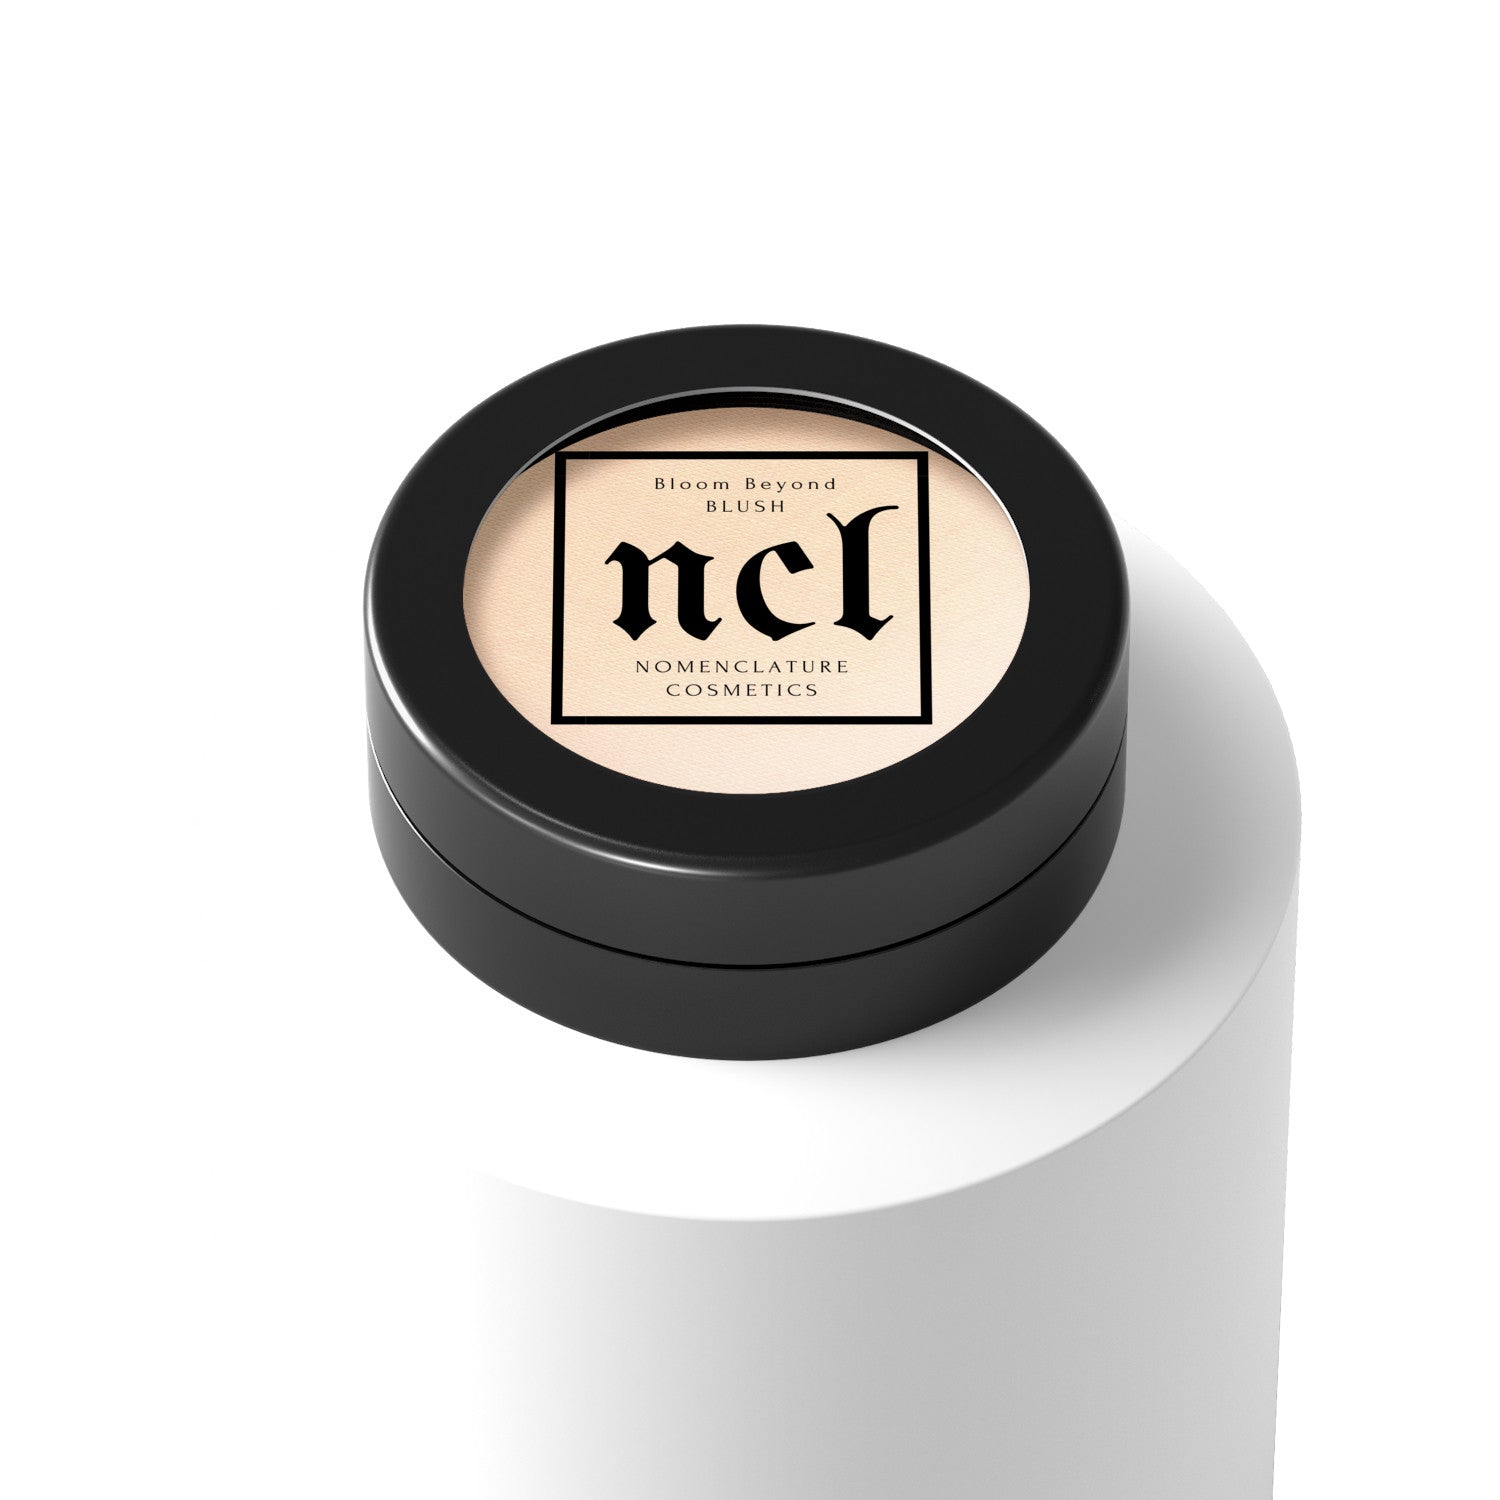 nomenclaturecosmetics beauty product